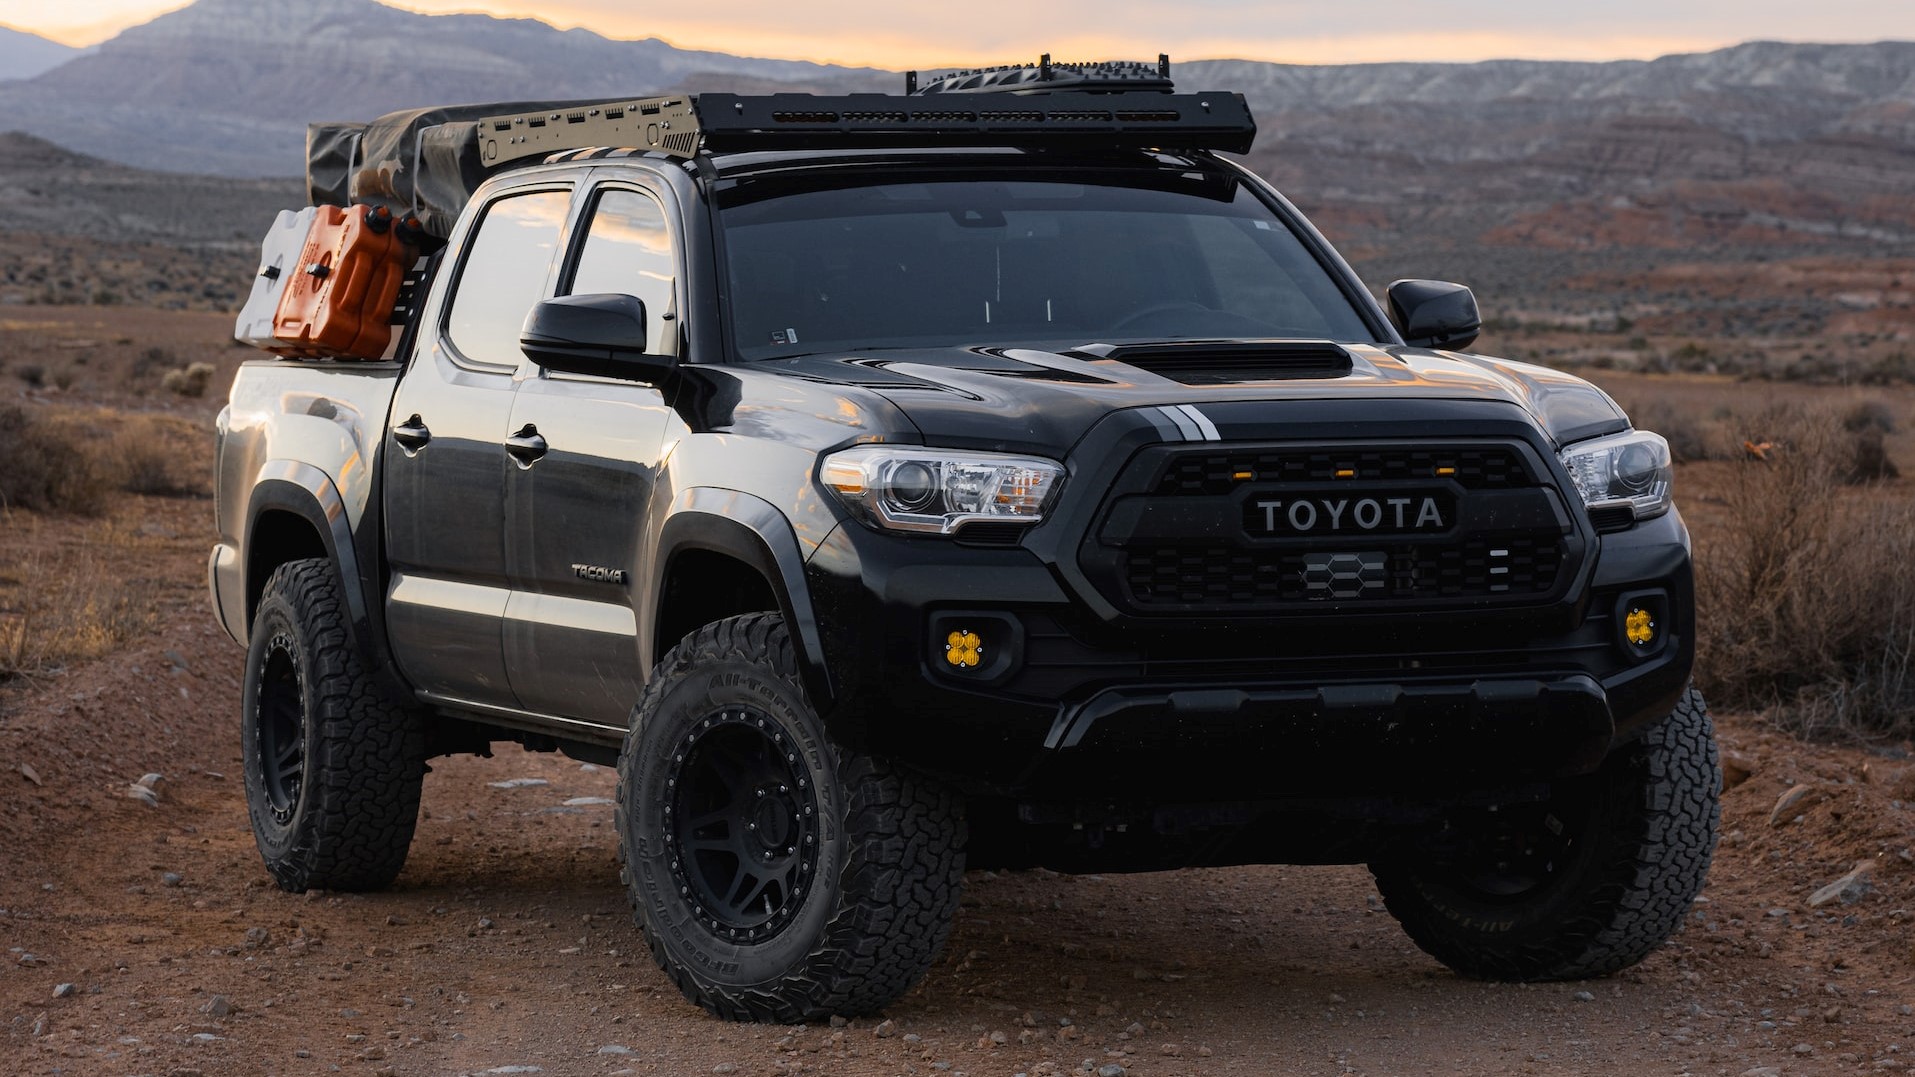 Black Toyota Pick-up Truck | Goodwill Car Donations
